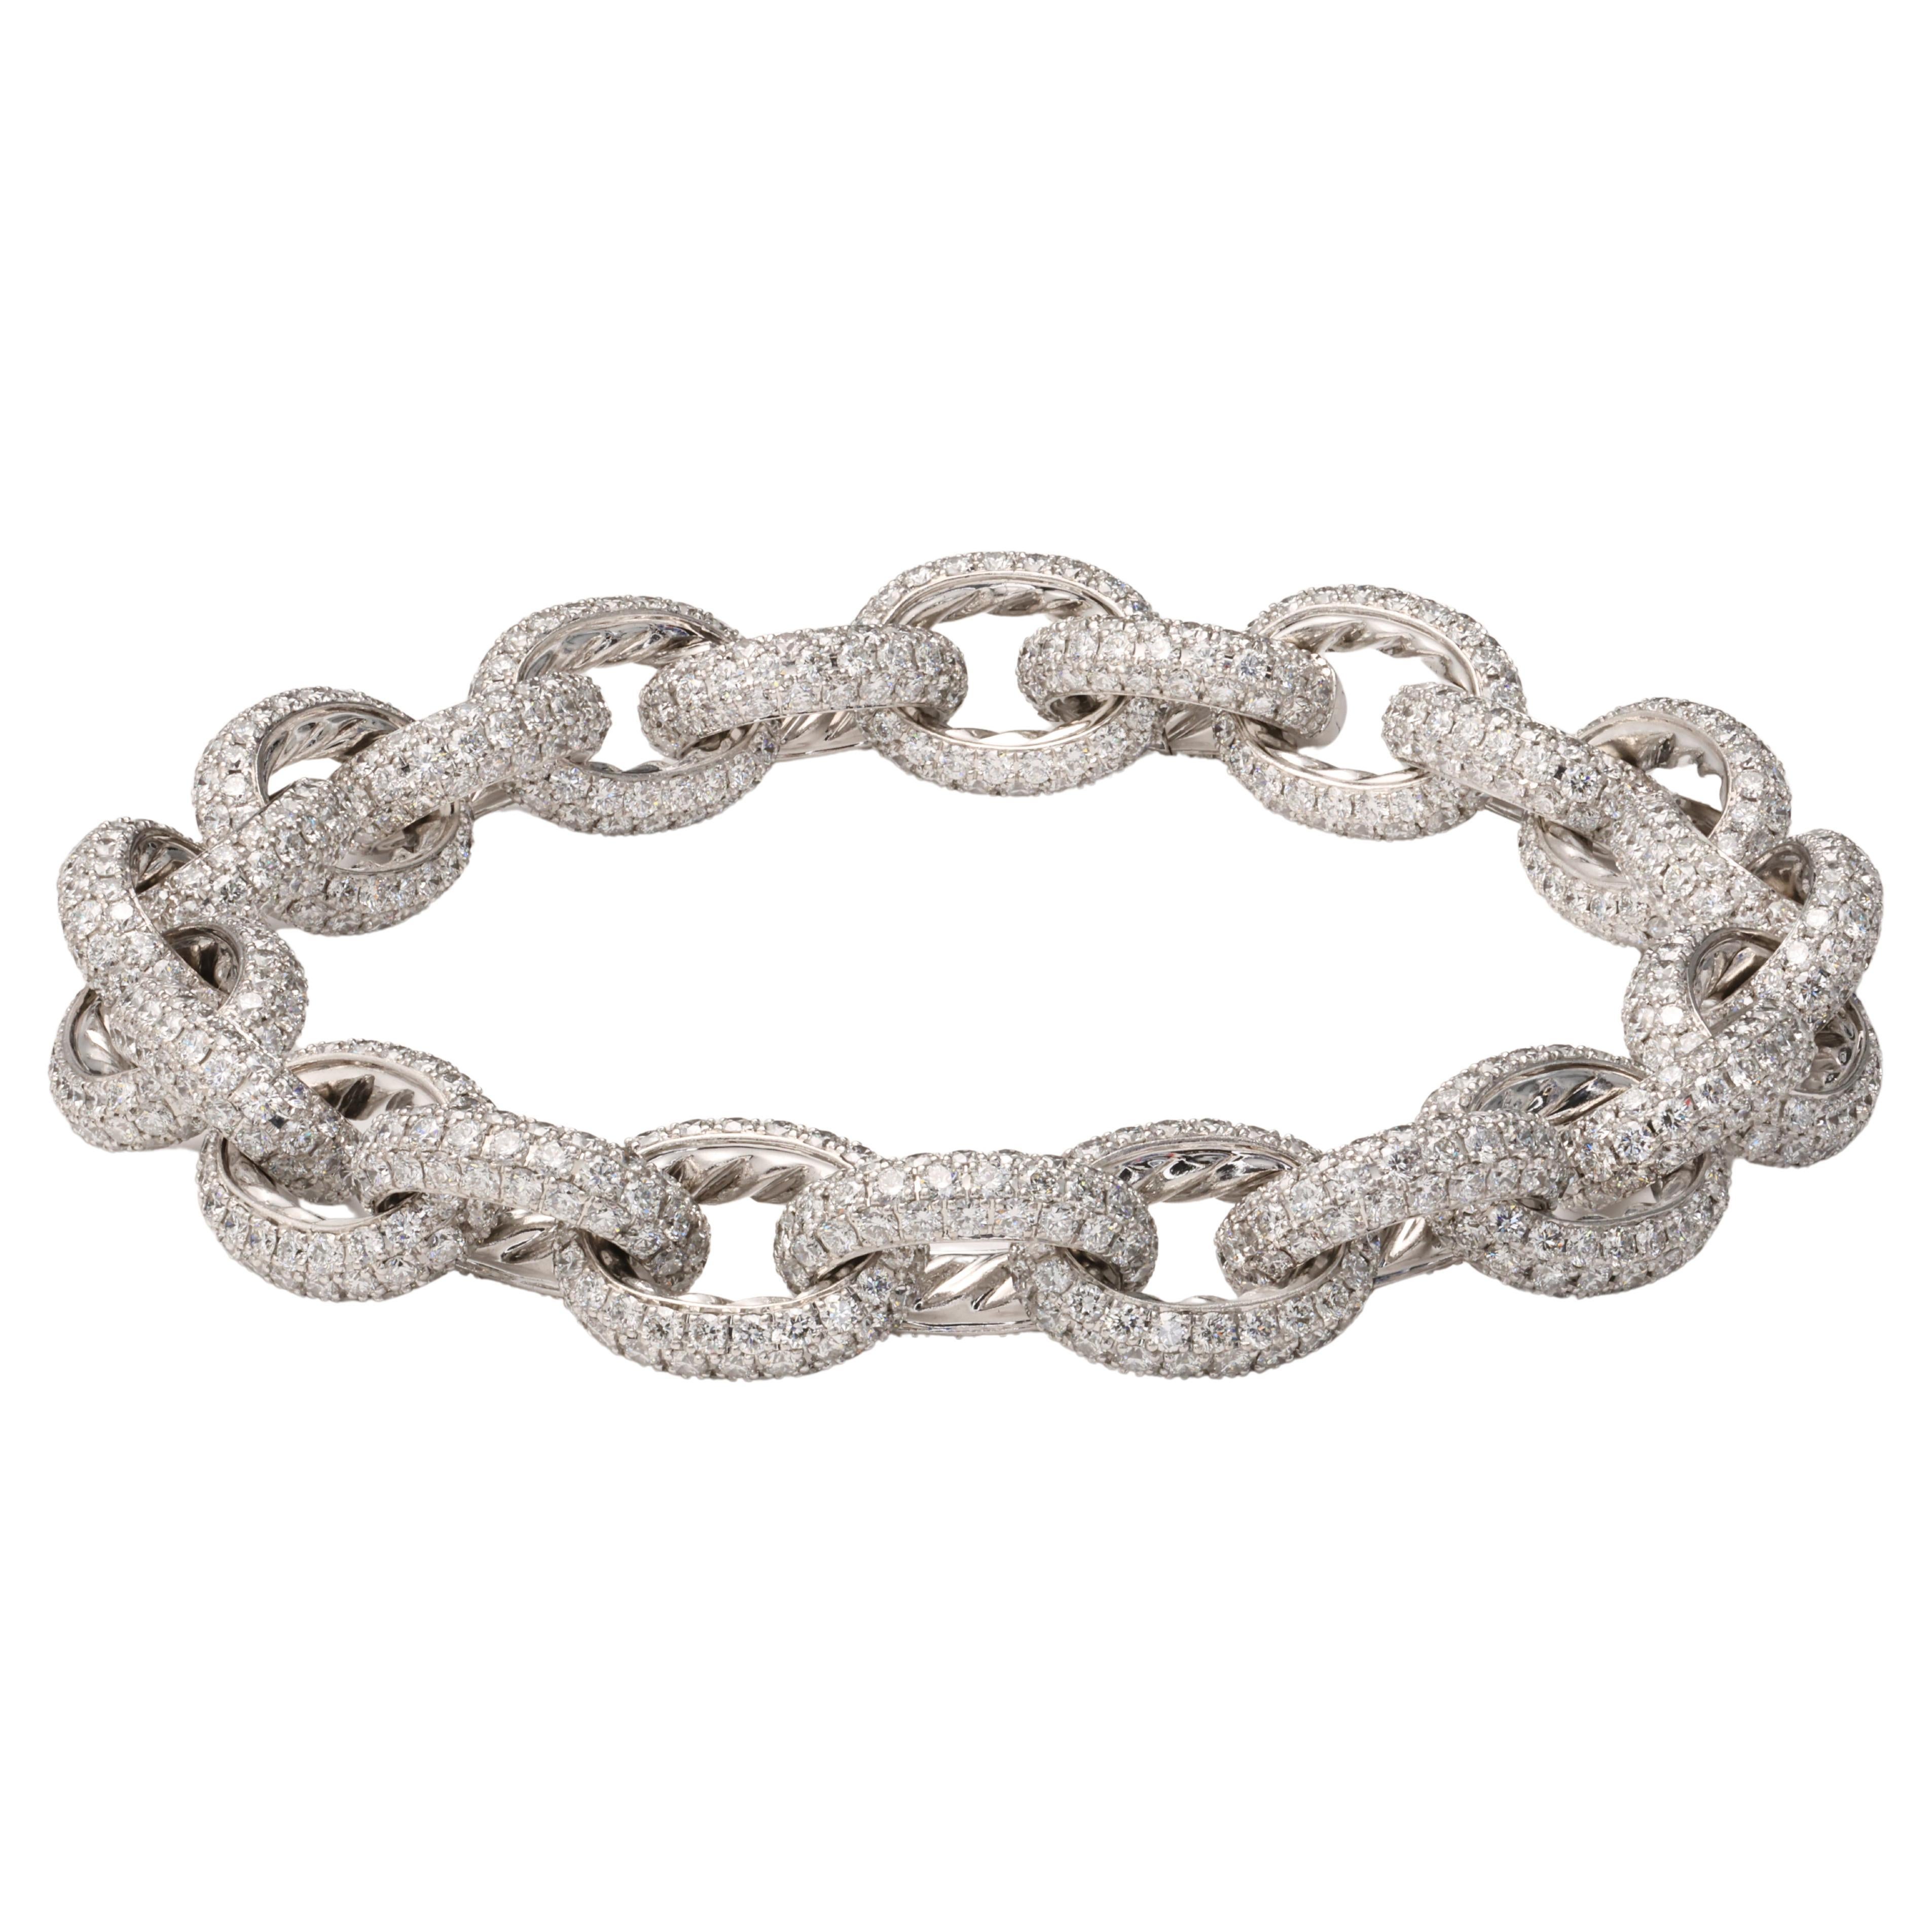 David Yurman Pave Chain Link Diamond Bracelet in 18 Karat White Gold